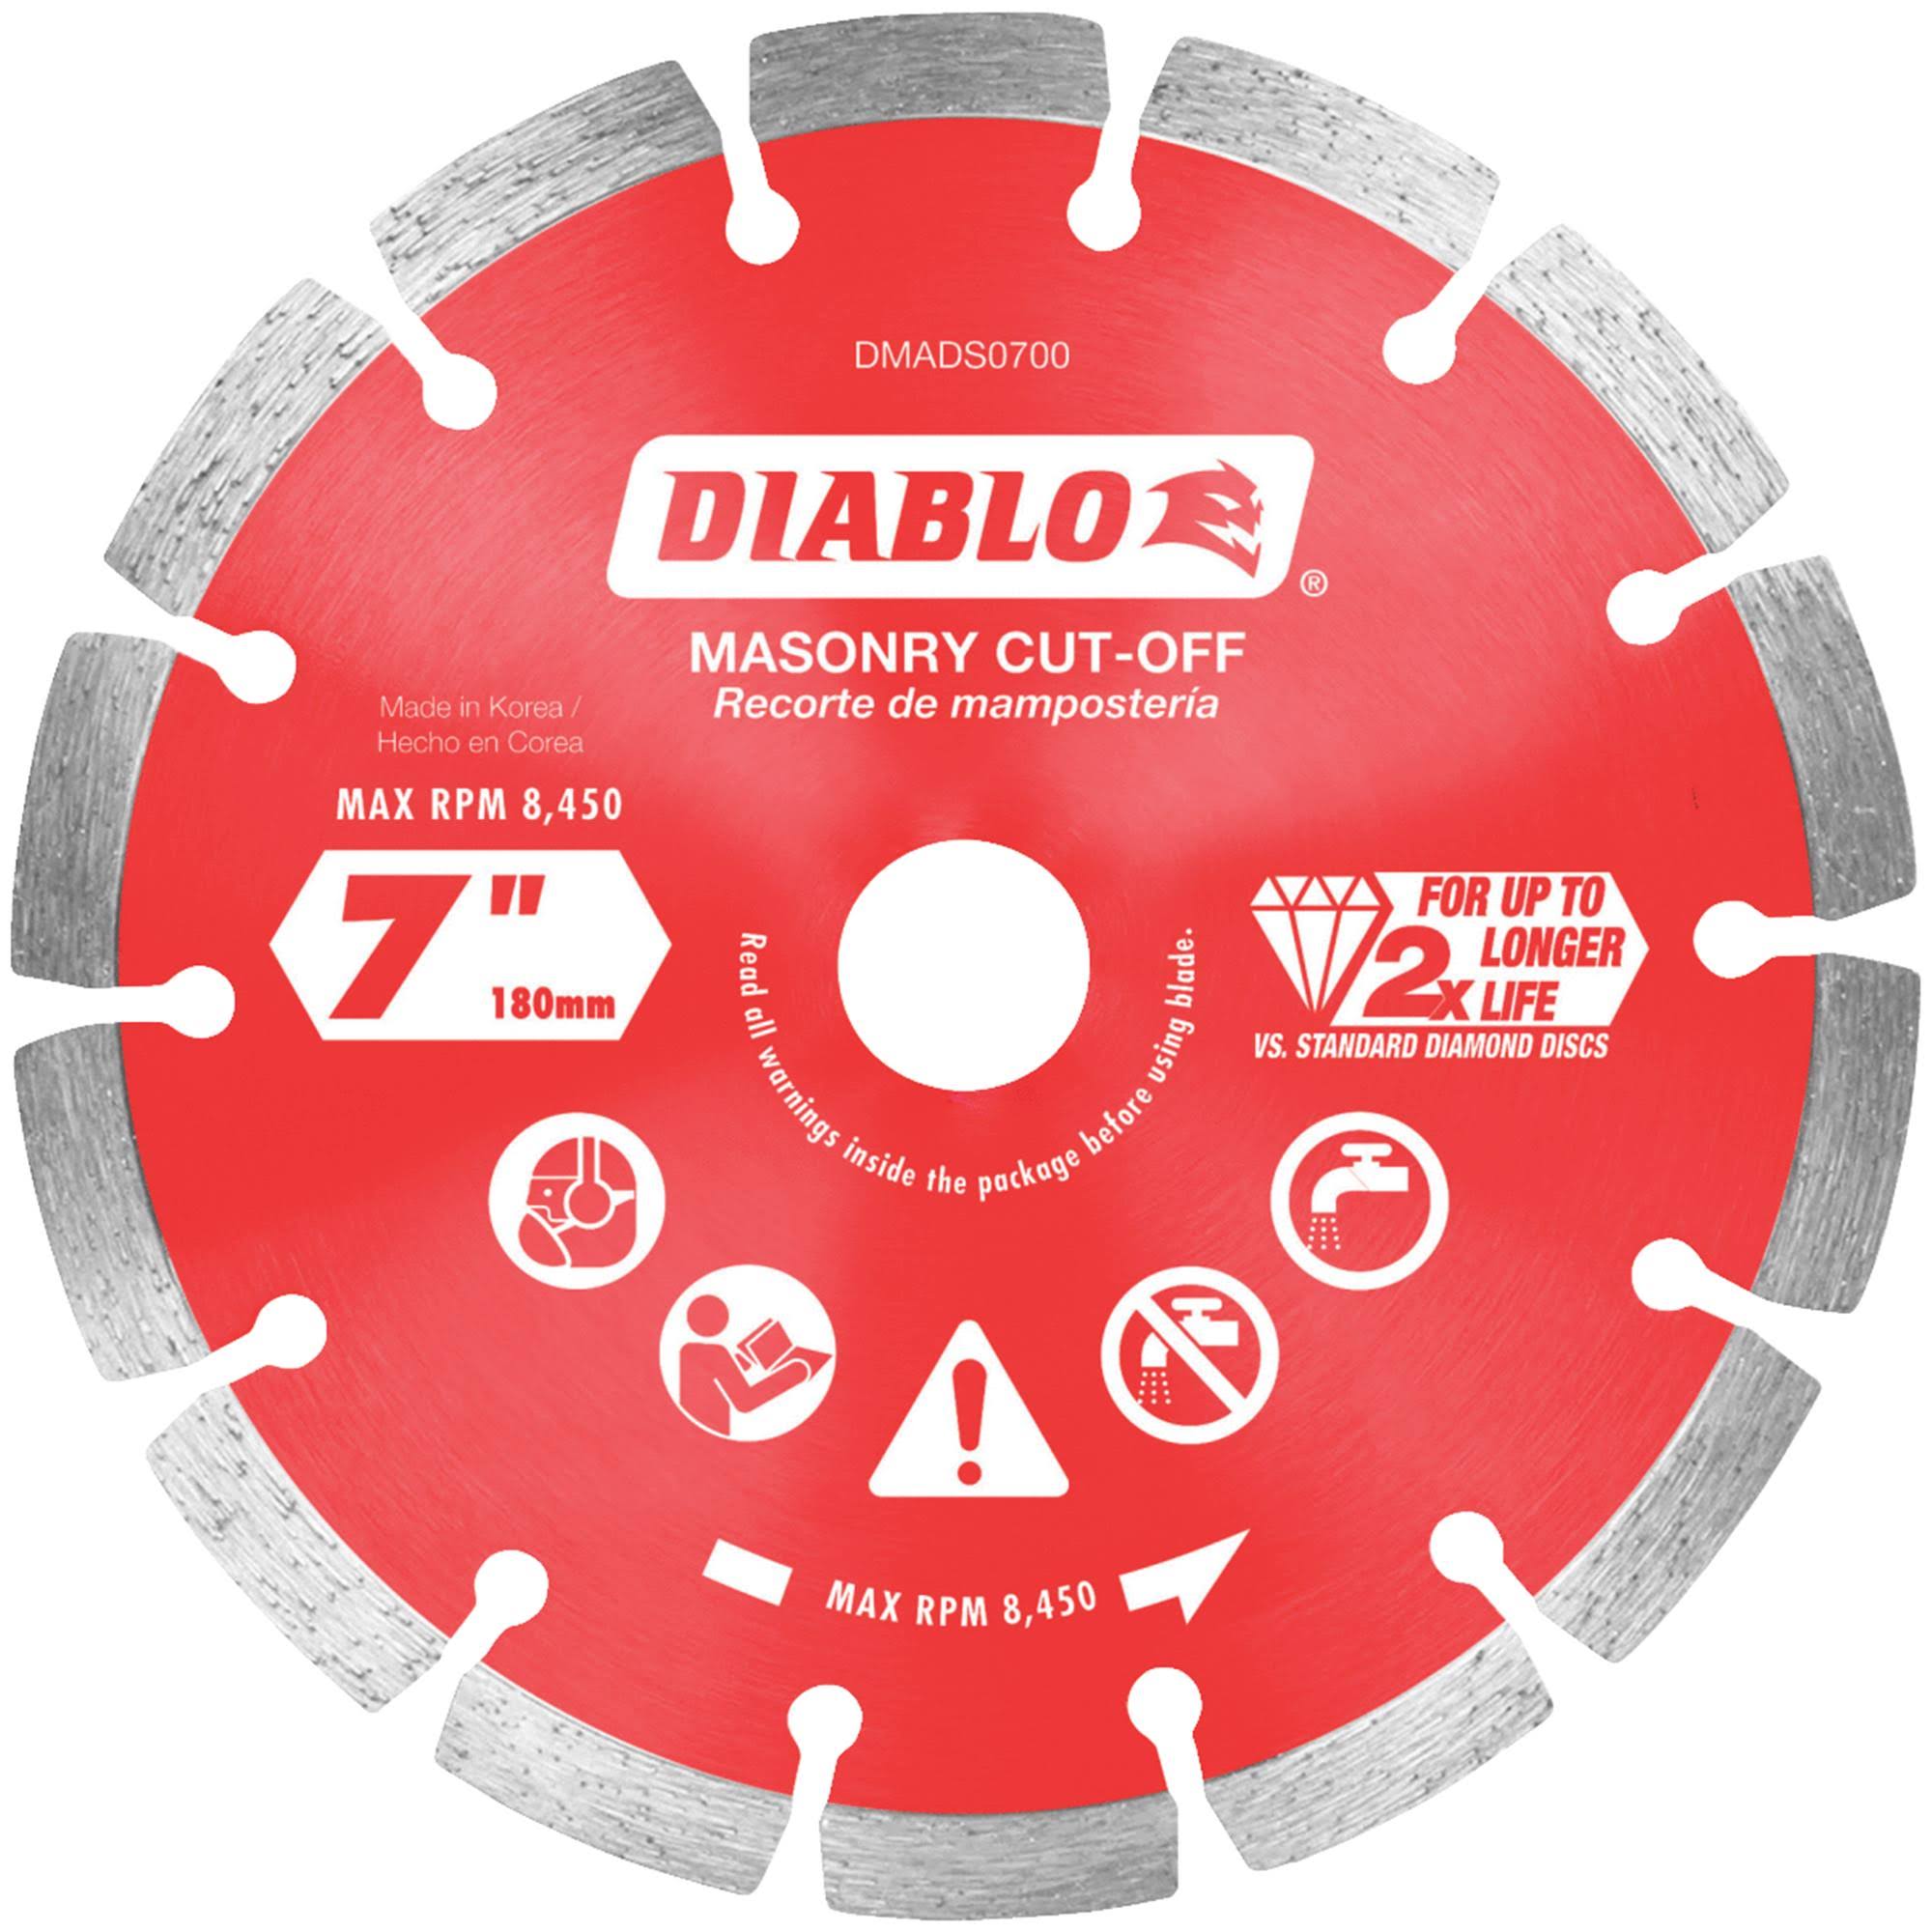 Diablo-dmads0700 7in. Diamond Segmented Cut-Off Discs for Masonry